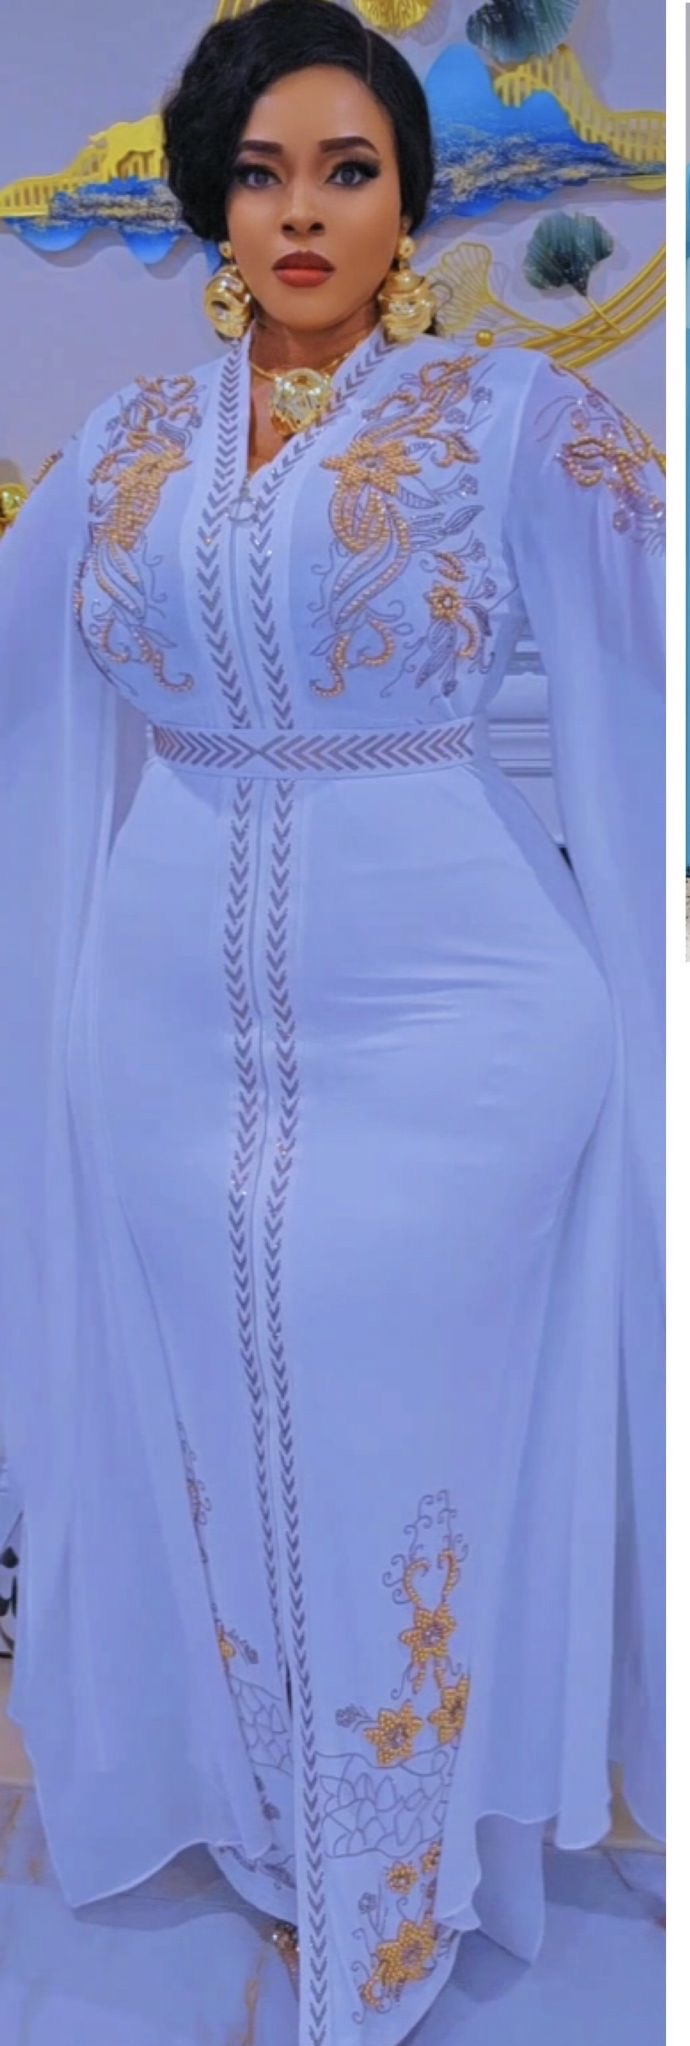 Lycra white gorgeous dress